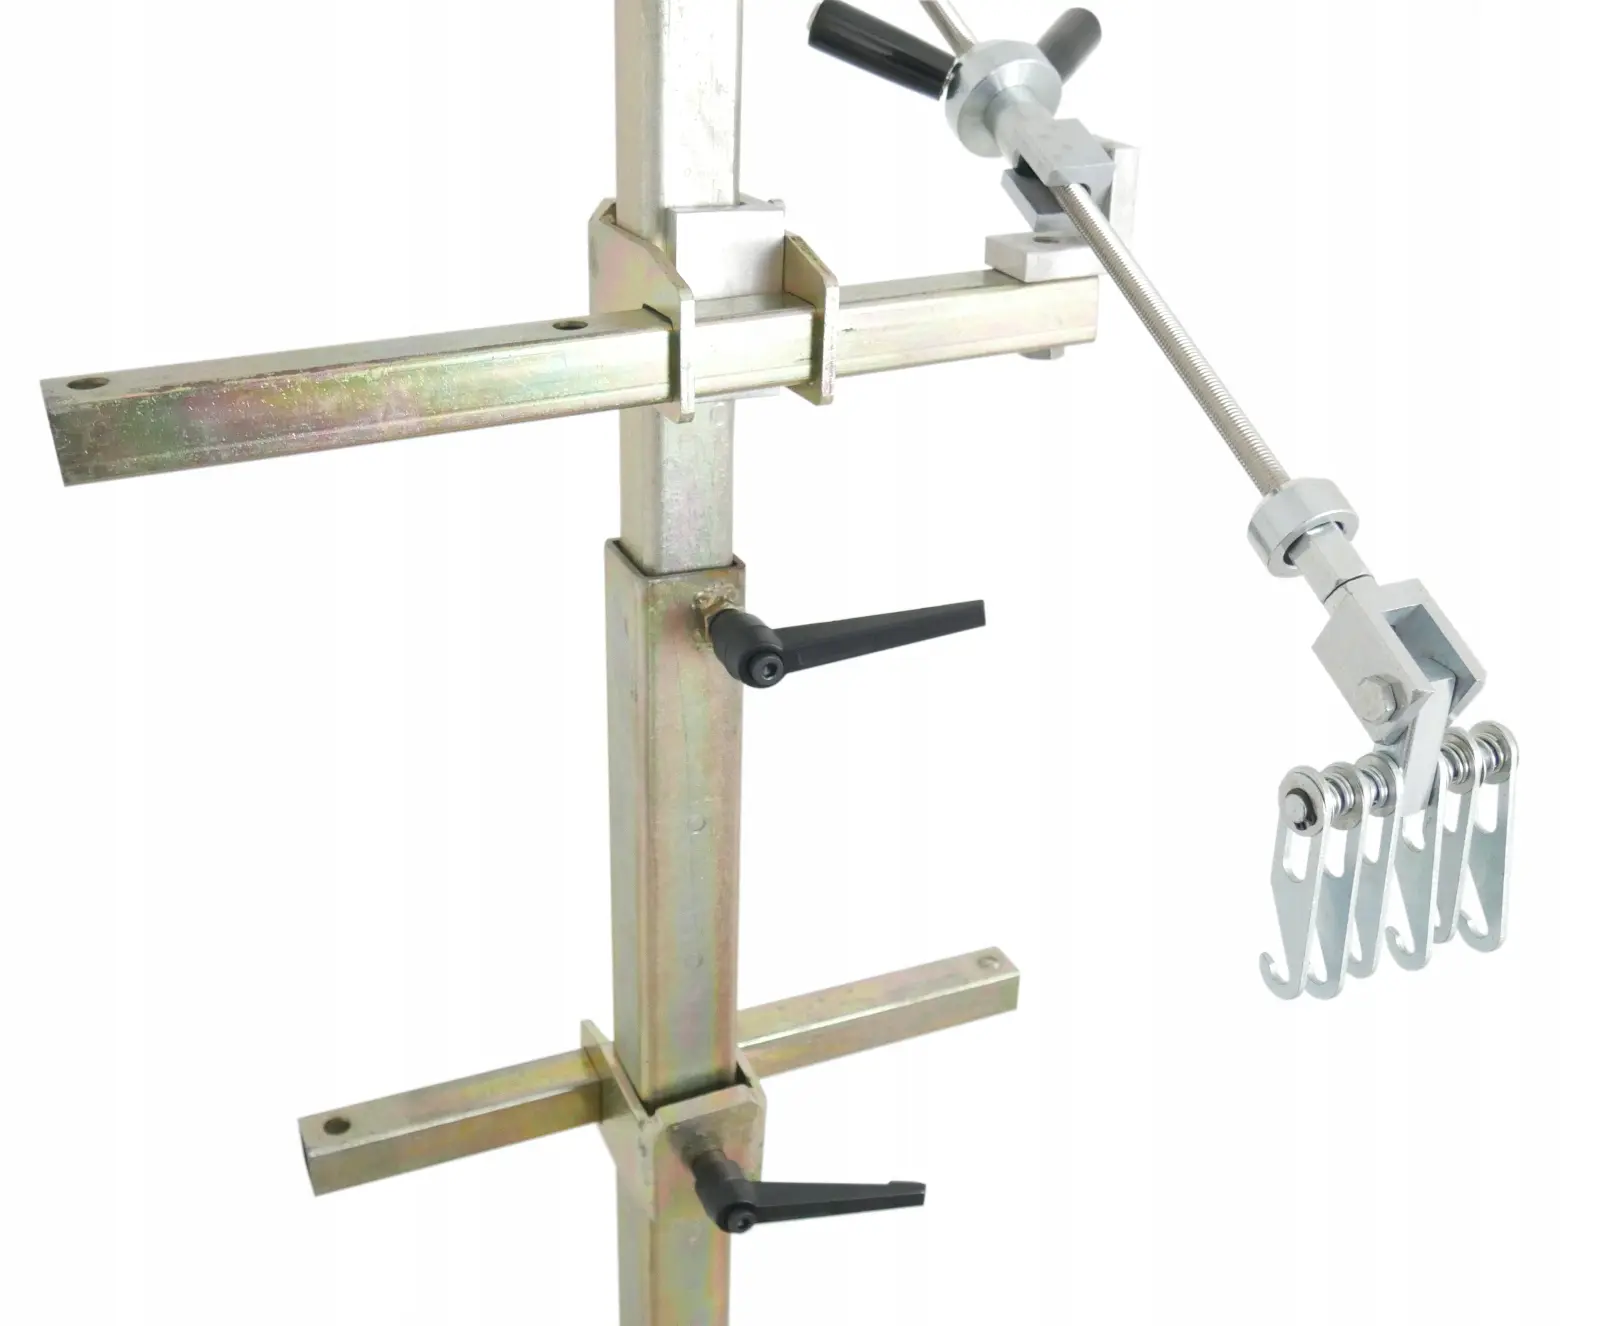 Puller Panelowy - Smartpuller - Pulling bar - Zestaw 09